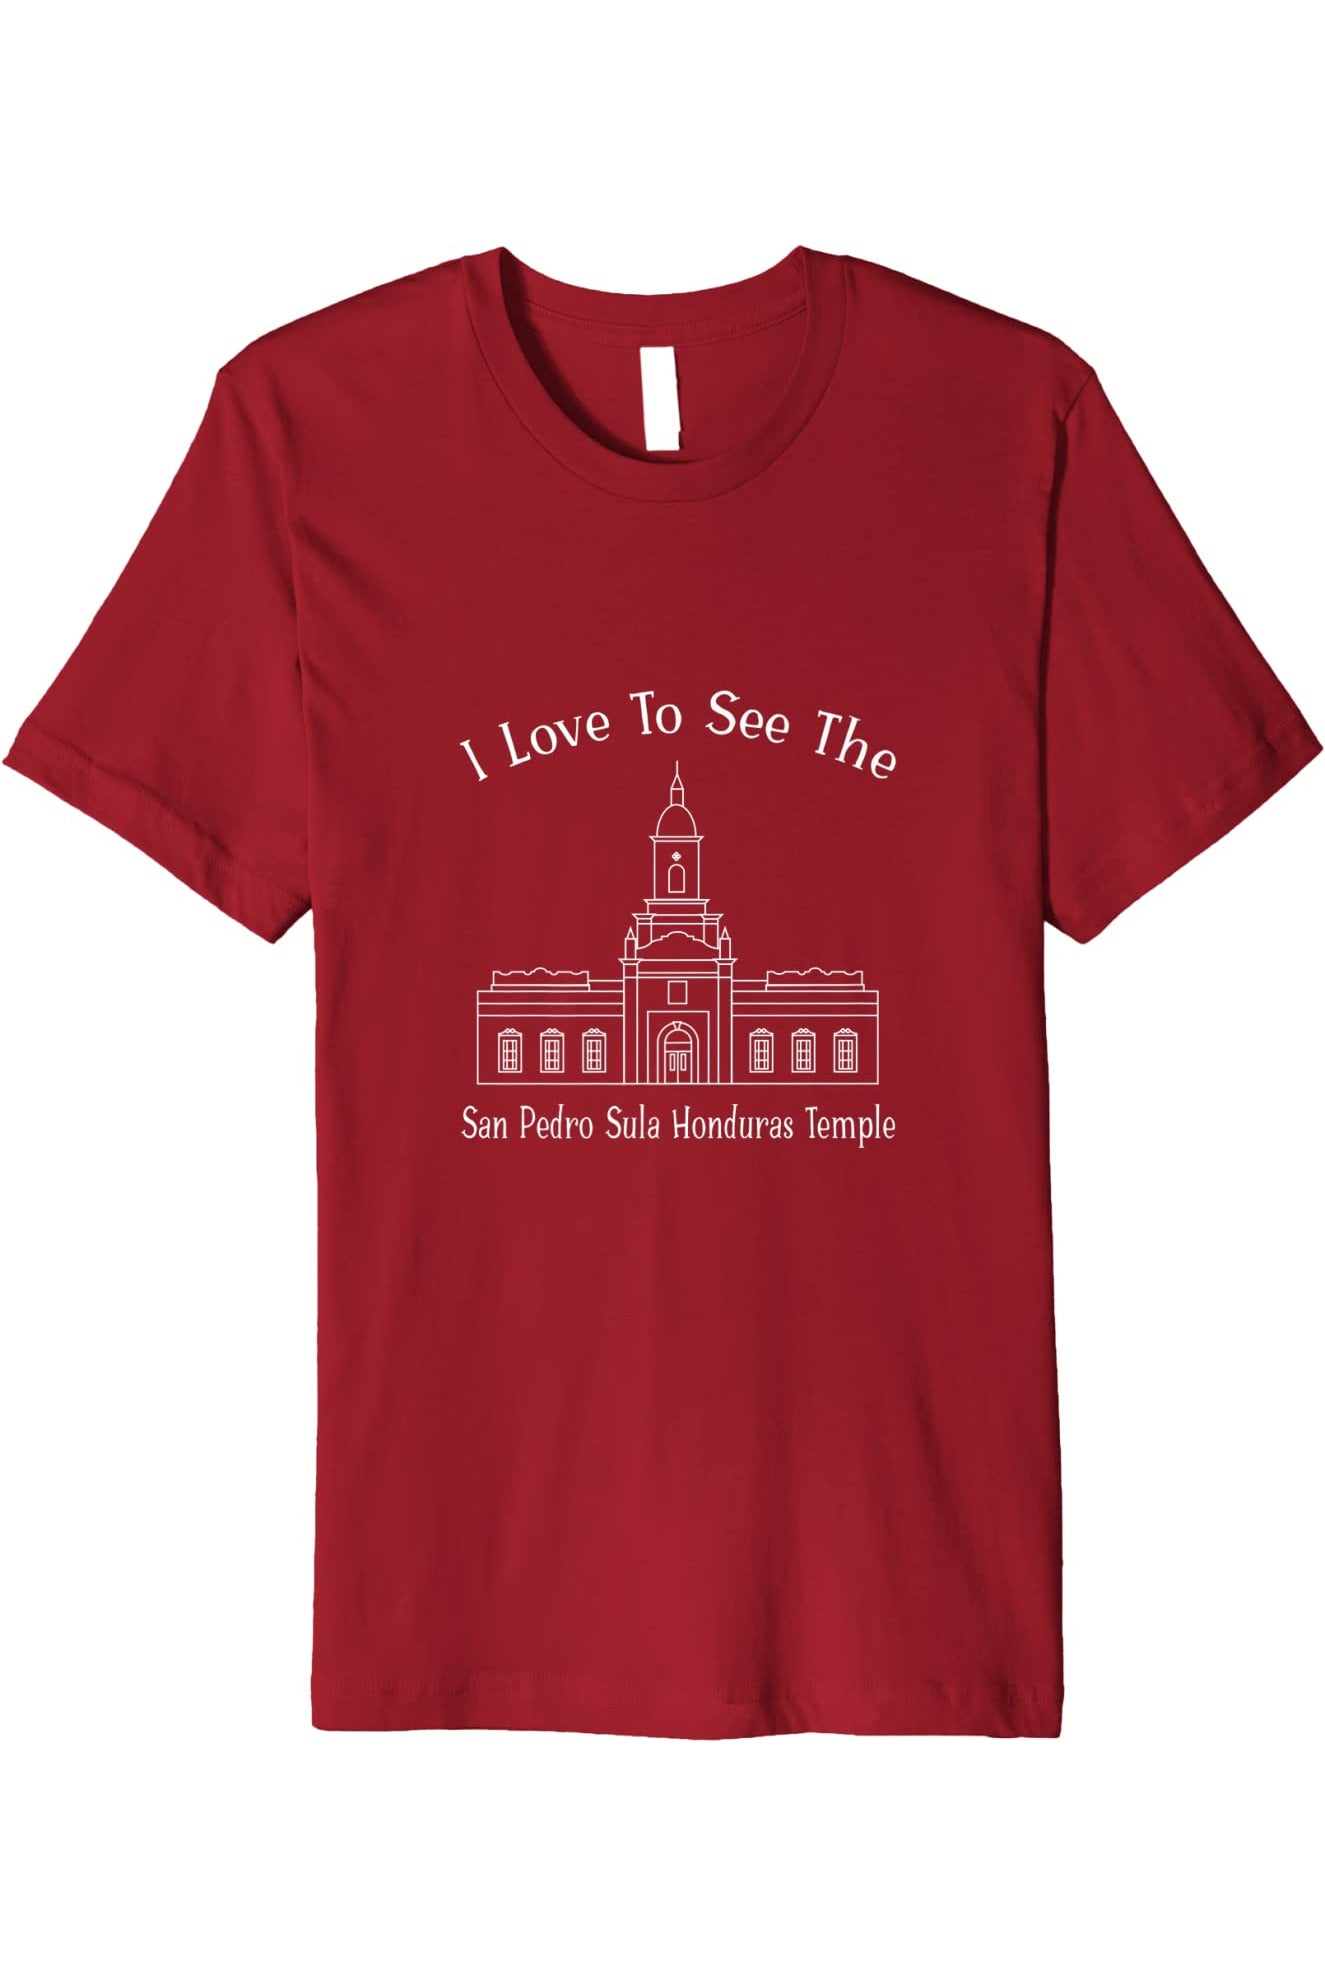 San Pedro Sula Honduras Temple T-Shirt - Premium - Happy Style (English) US